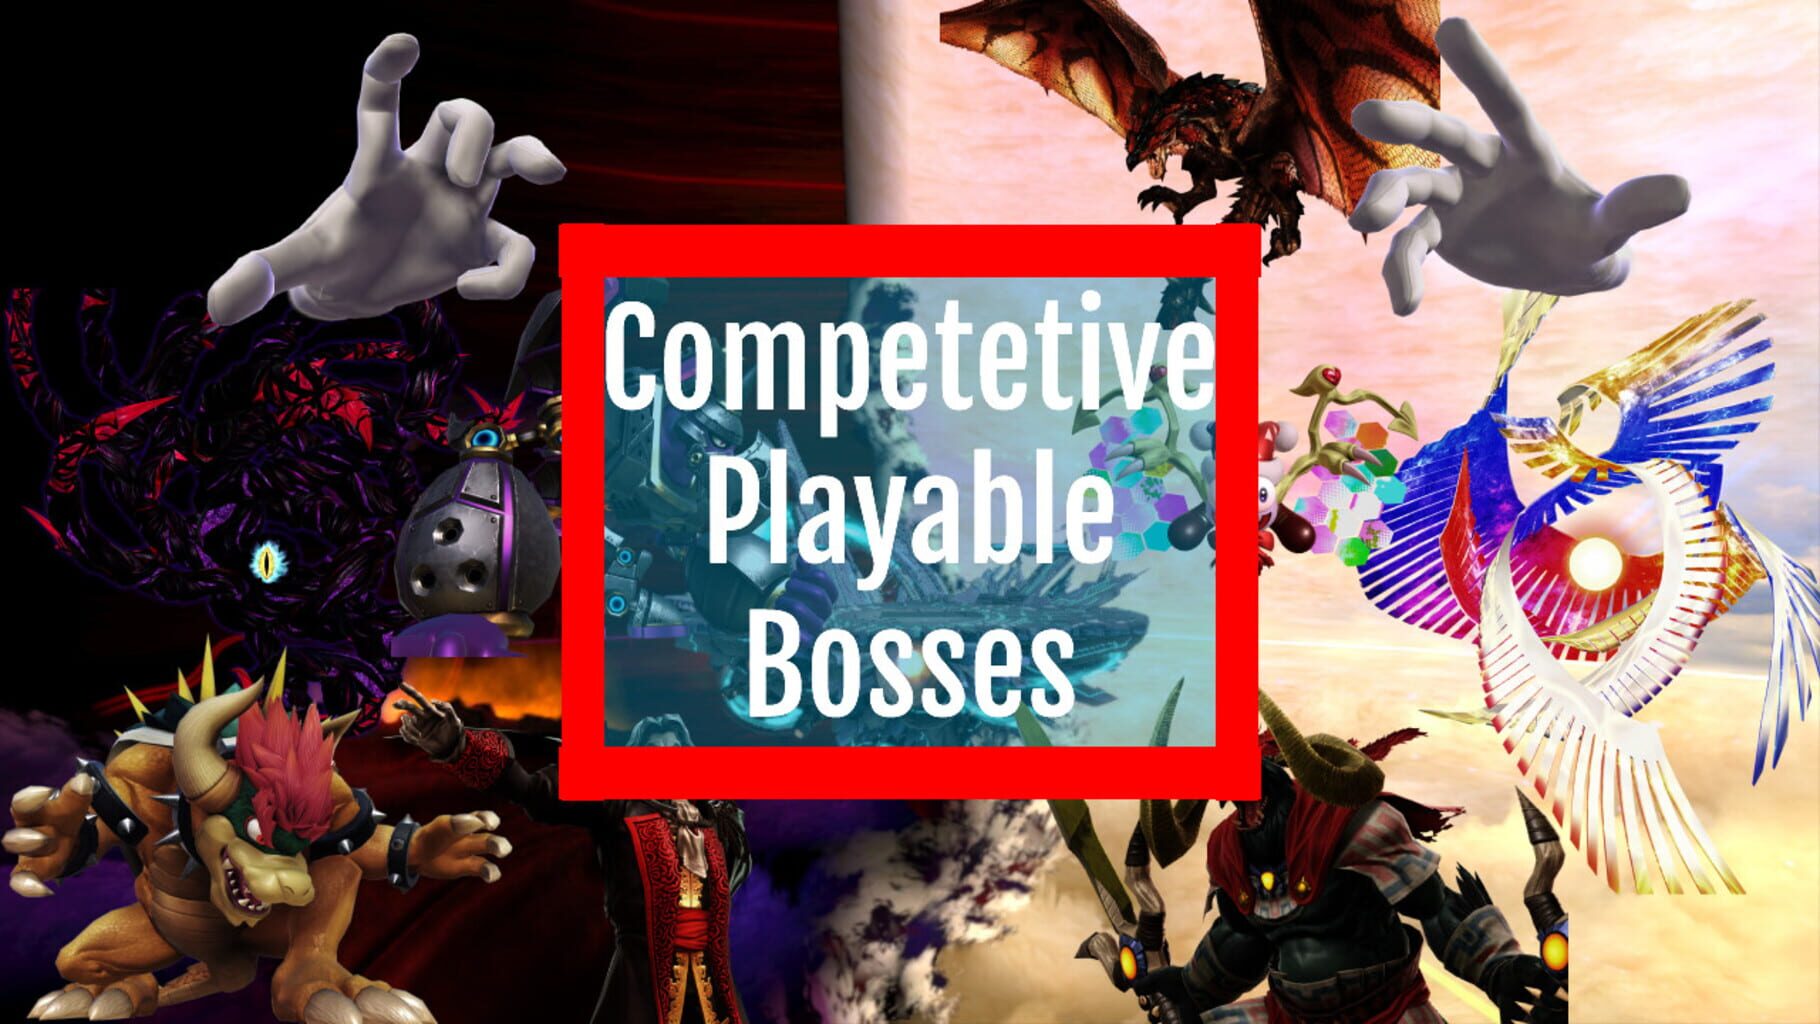 Super Smash Bros. Ultimate: Competitive Playable Bosses artwork